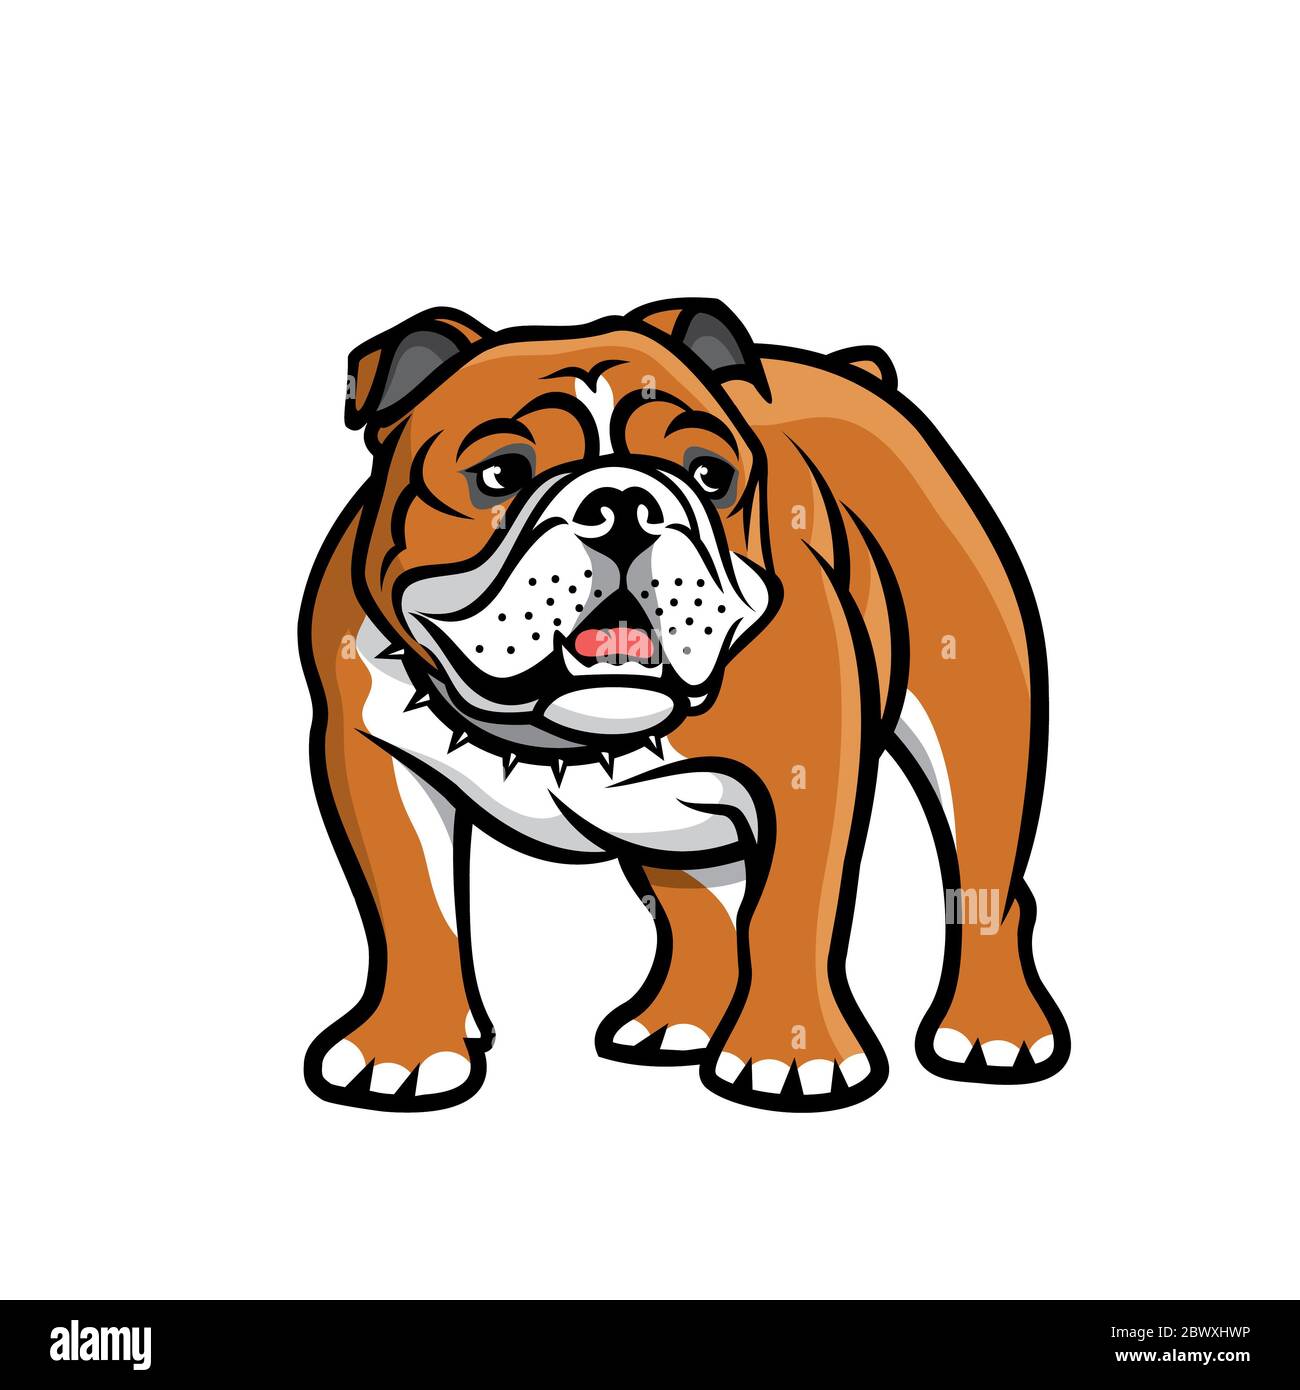 English bulldog - isolated vector illustration Stock Photo